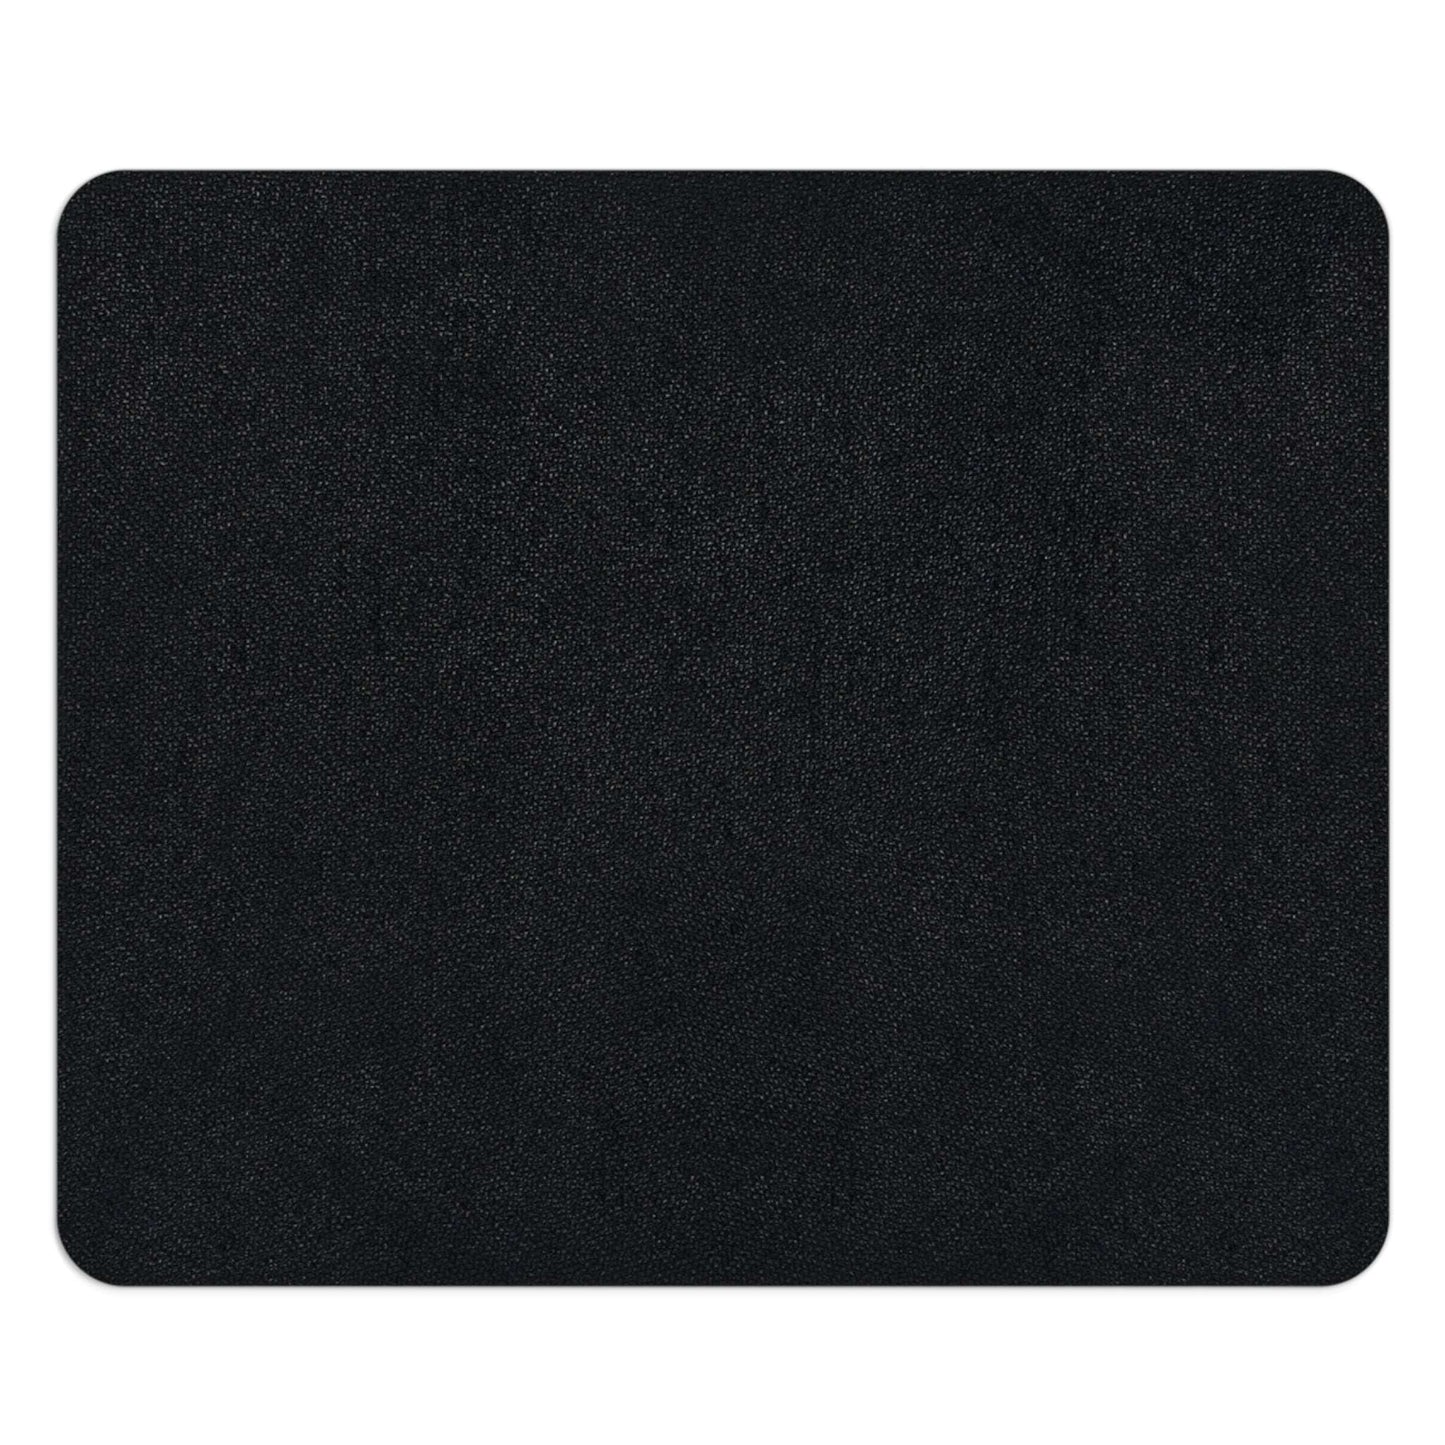 Computer Mouse Pad, Non-slip rubber bottom, Black Cat w Flowers